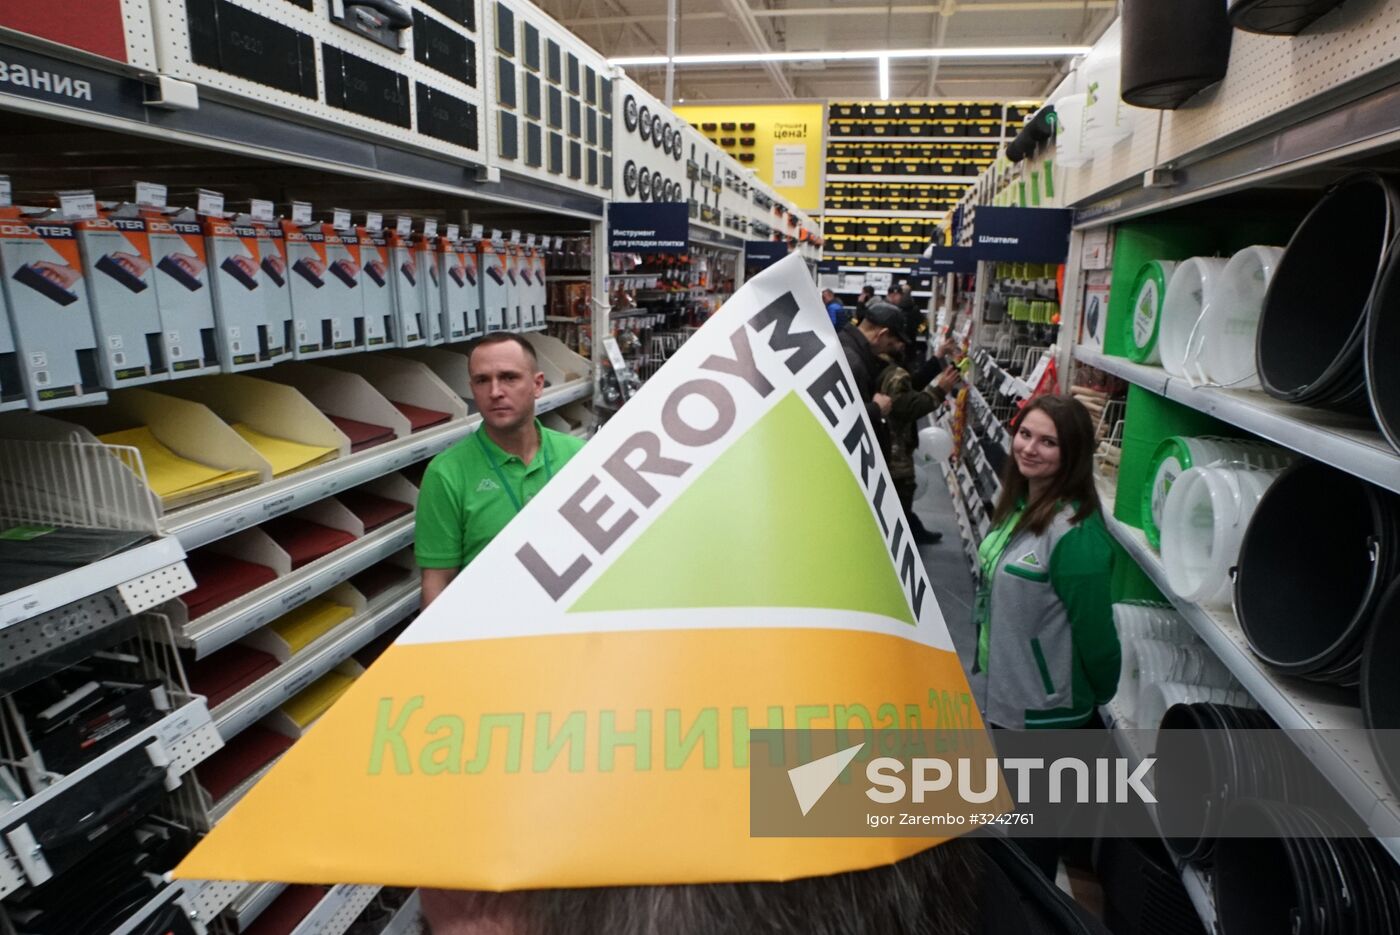 Leroy Merlin megamarket opens in Kaliningrad